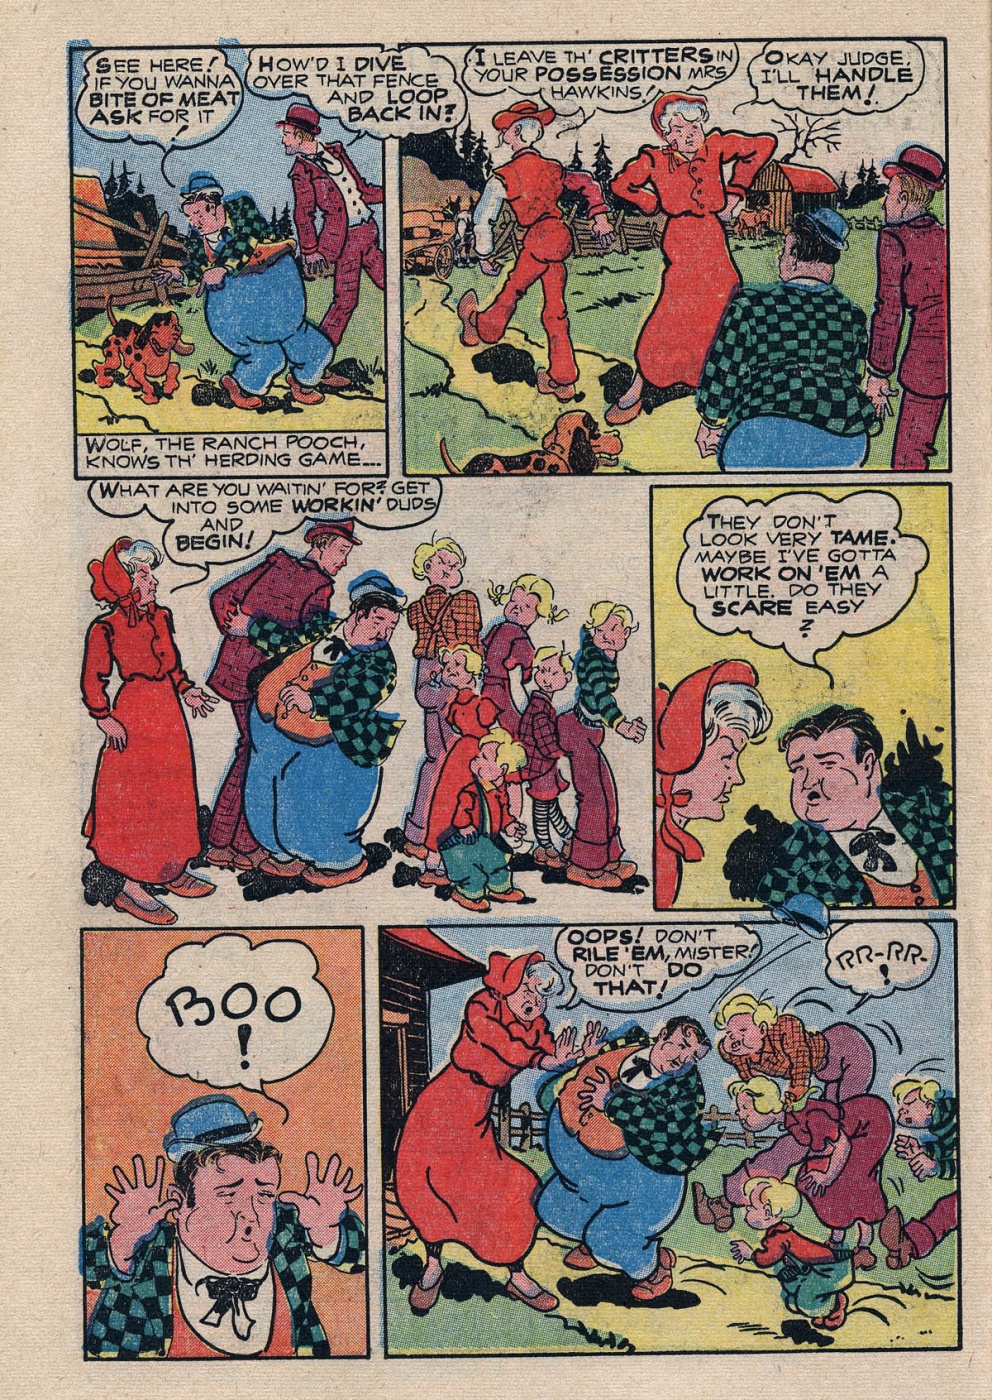 Funny Comic Strips - Abbott and Costello 001 (Feb 1948) 12